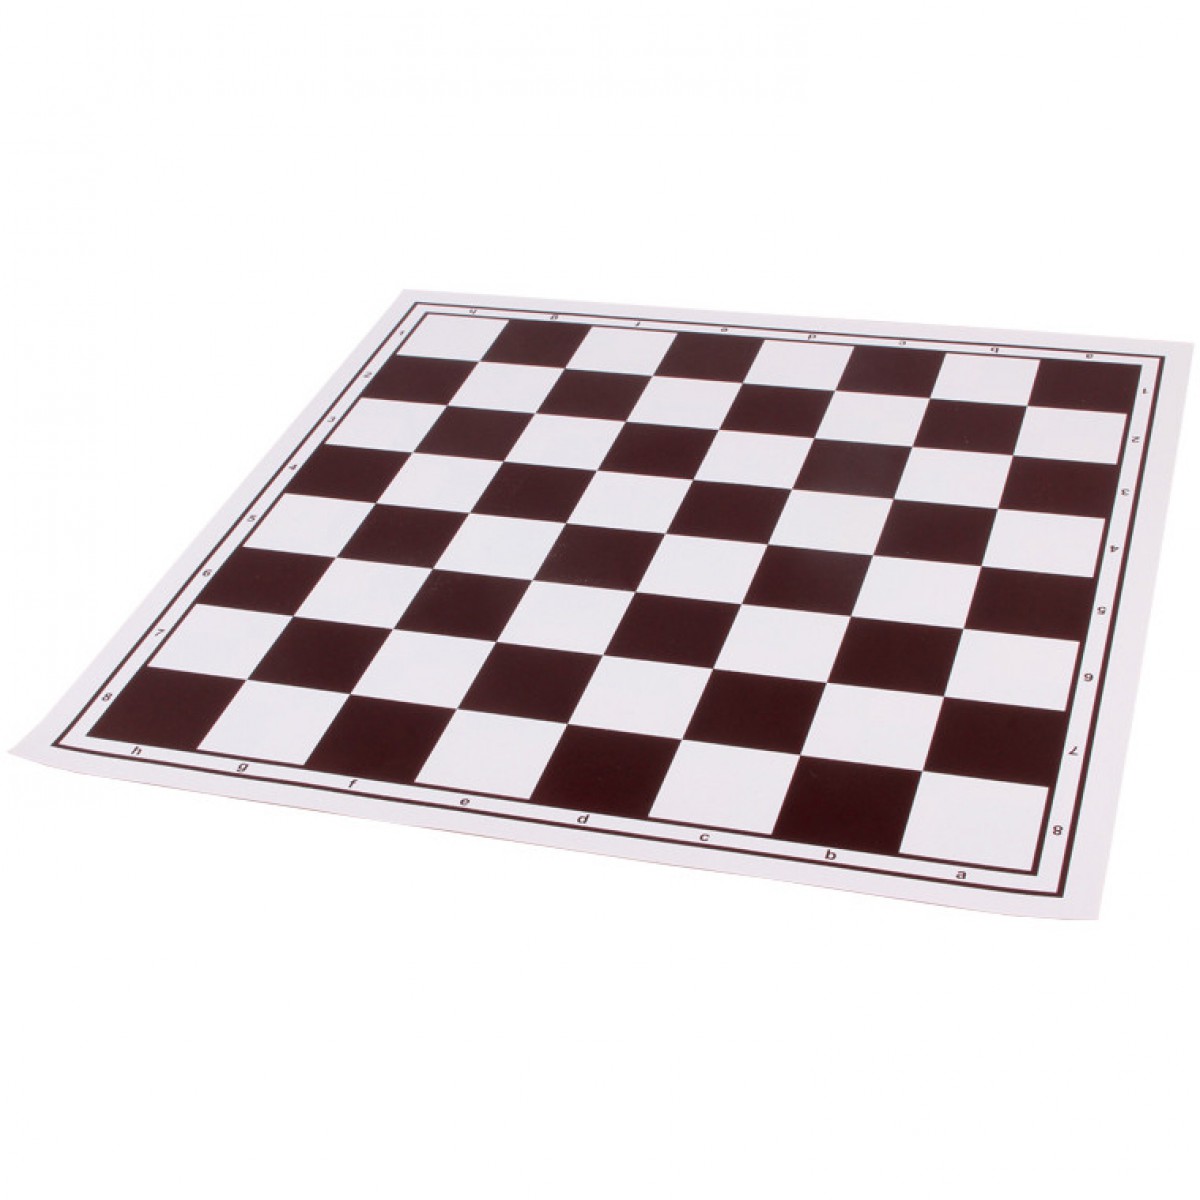 Chessboard. Шахматная доска виниловая 51х51. Доска шахматная виниловая большая 51 см. Доска шахматная виниловая (средняя) 43 см. Виниловая доска 3х3х шахматы.